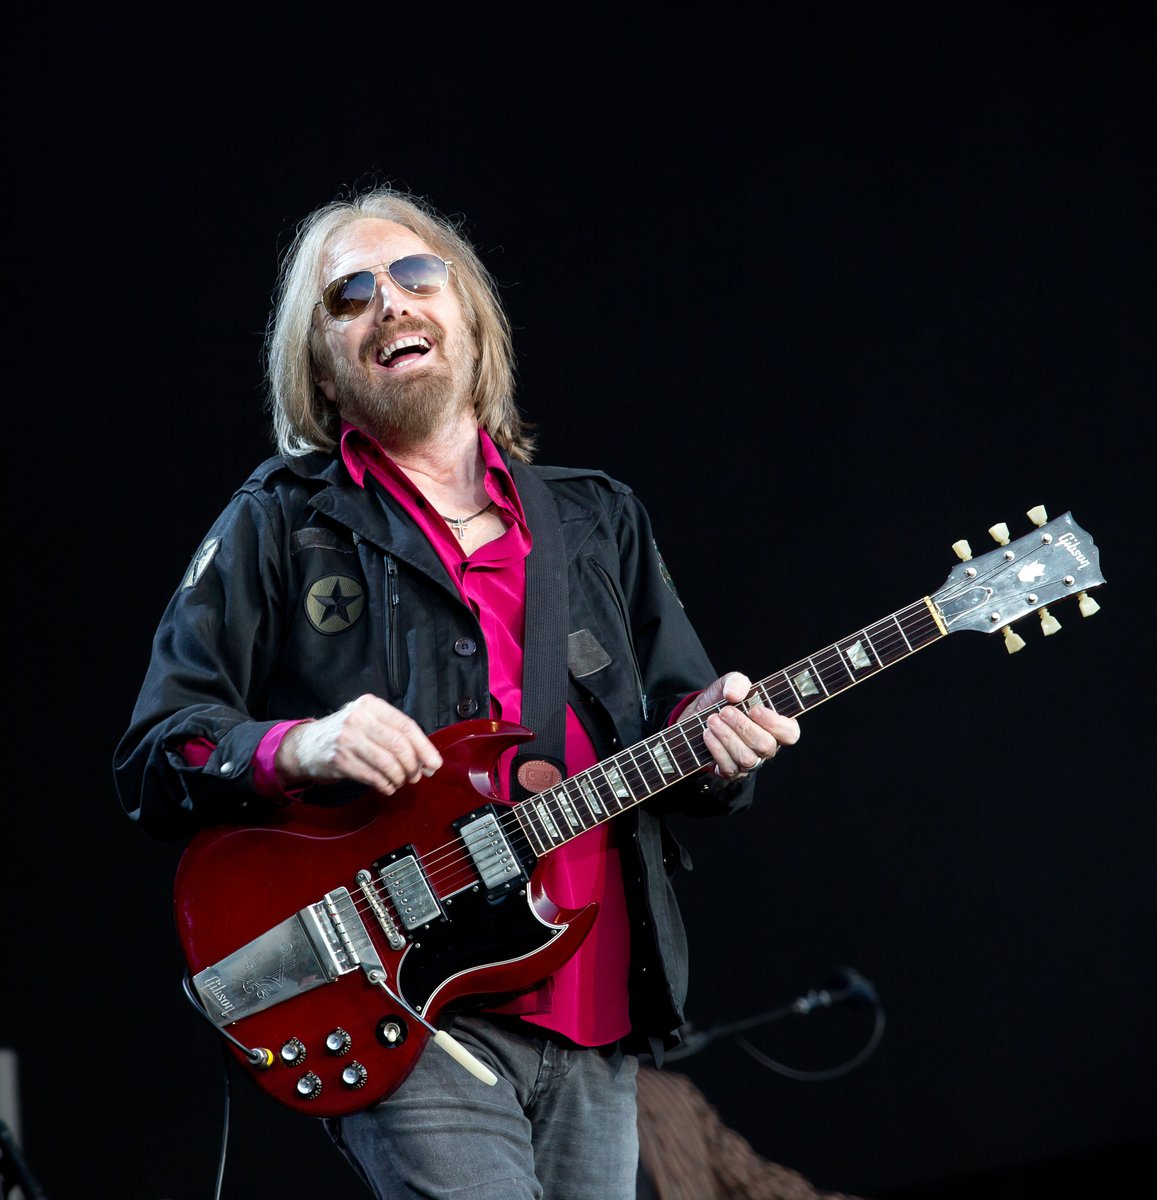 Tom Petty - Tom Petty & The Heartbreakers
#TomPettyAndTheHeartbreakers #TomPetty